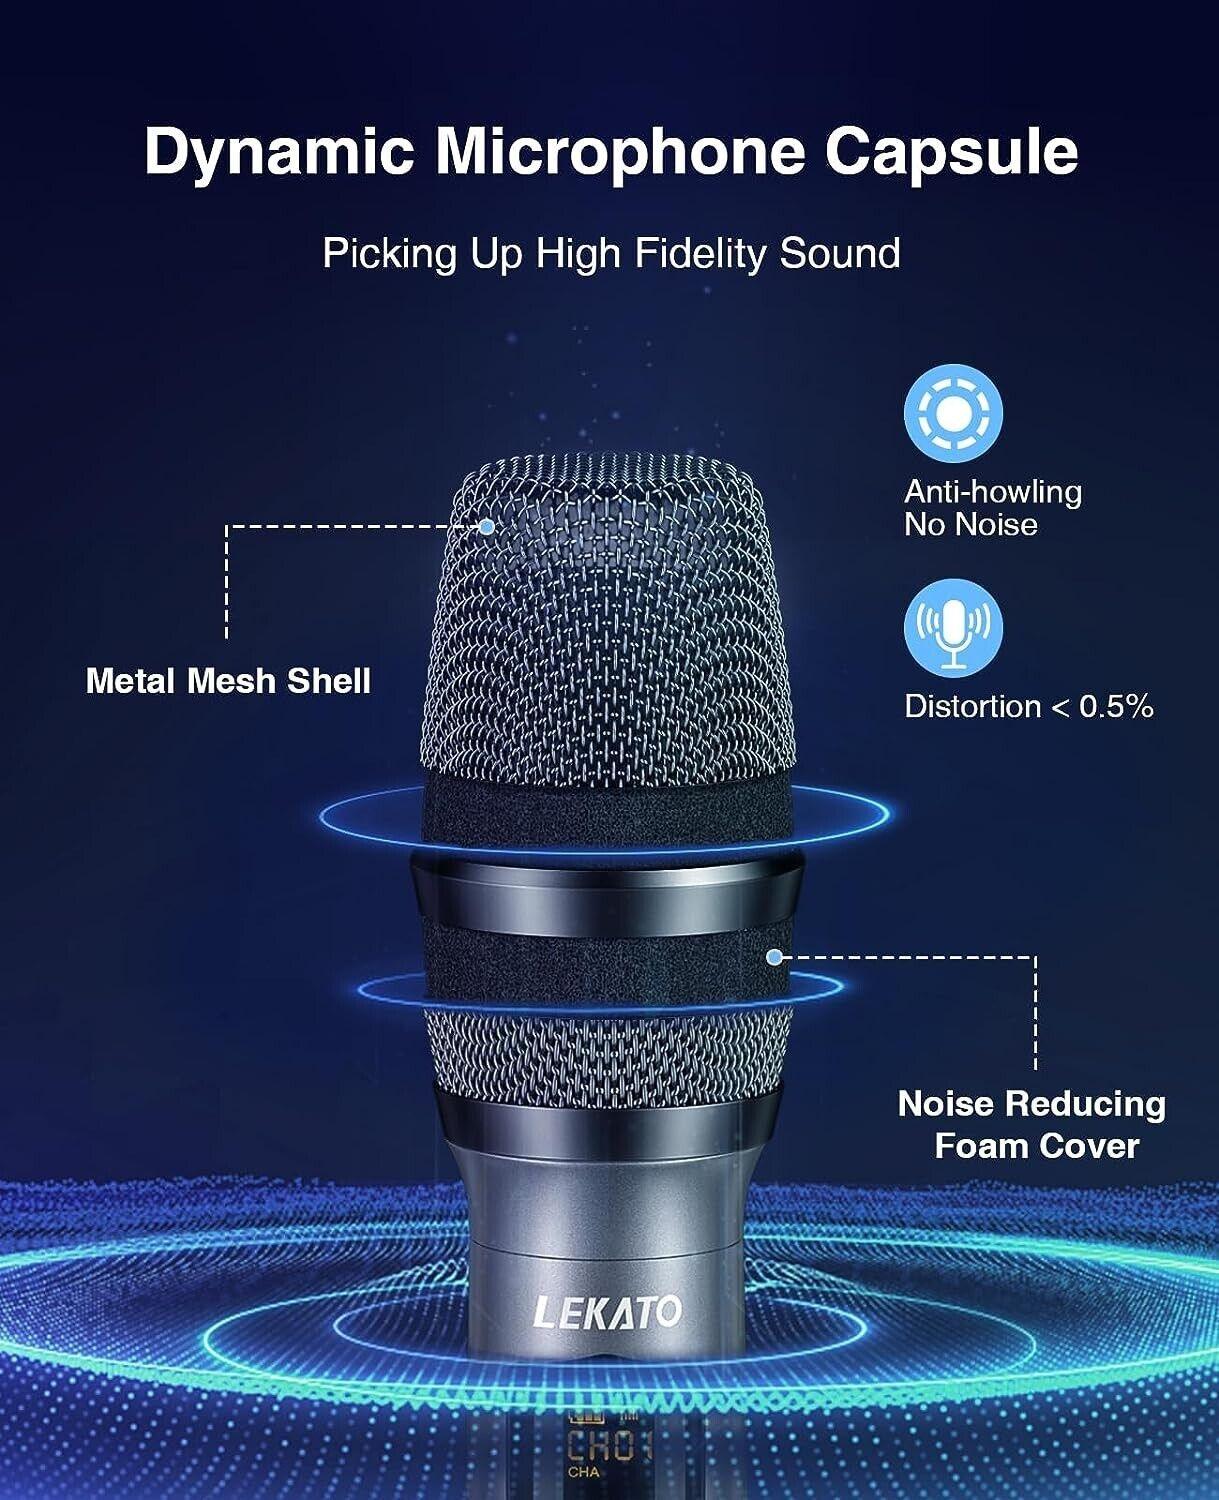 LEKATO Wireless Microphones, 2.4GHz Rechargeable Singing Mic, Dual Handheld - Massive Discounts